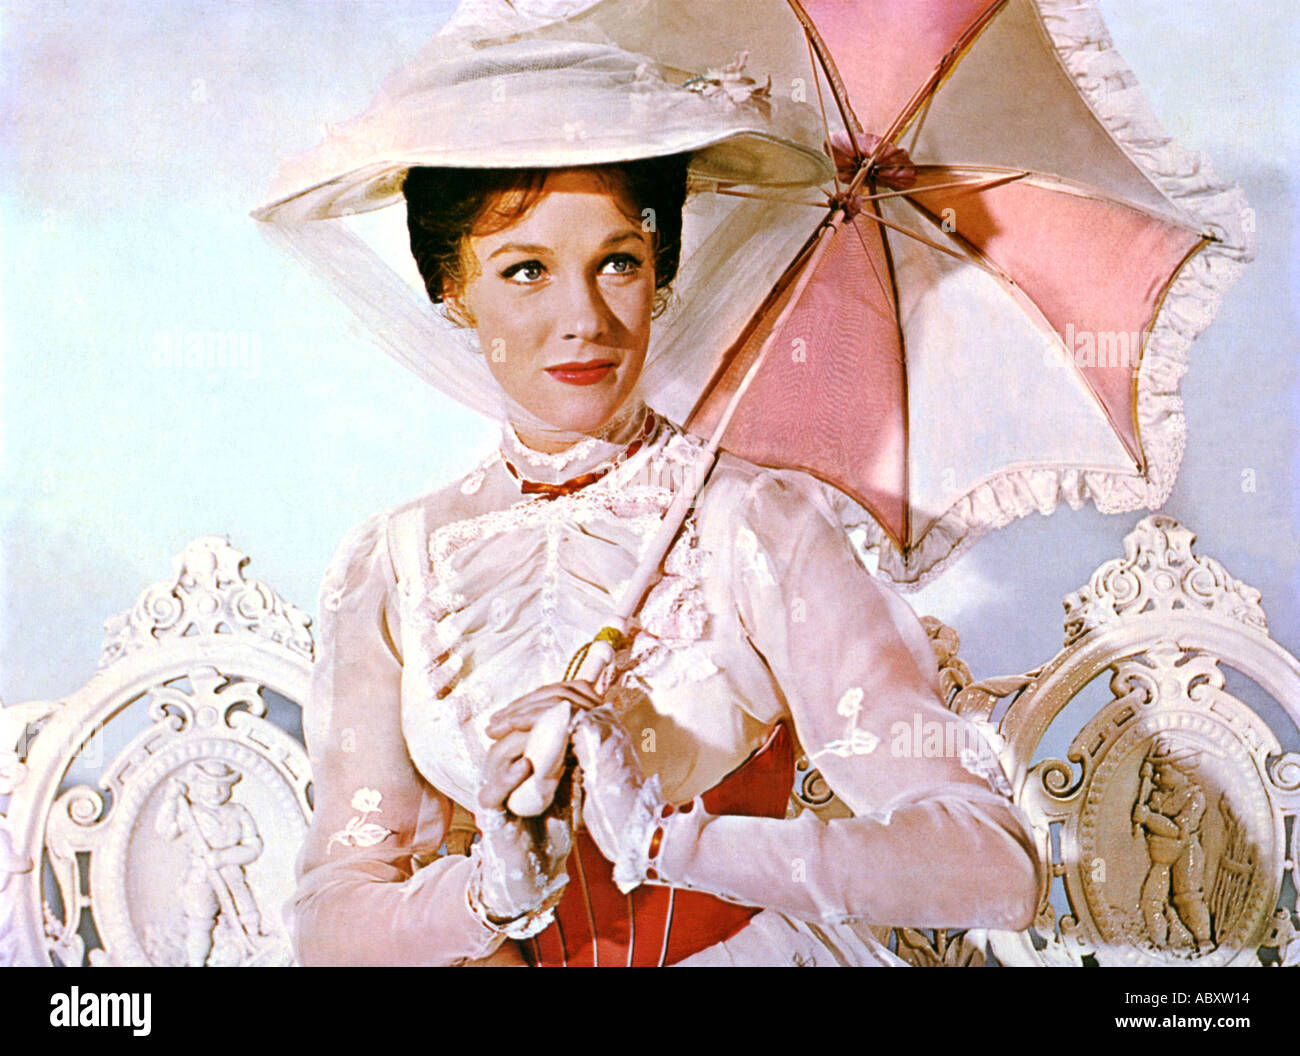 MARY POPPINS 1964 Disney película protagonizada por Julie Andrews Foto de stock